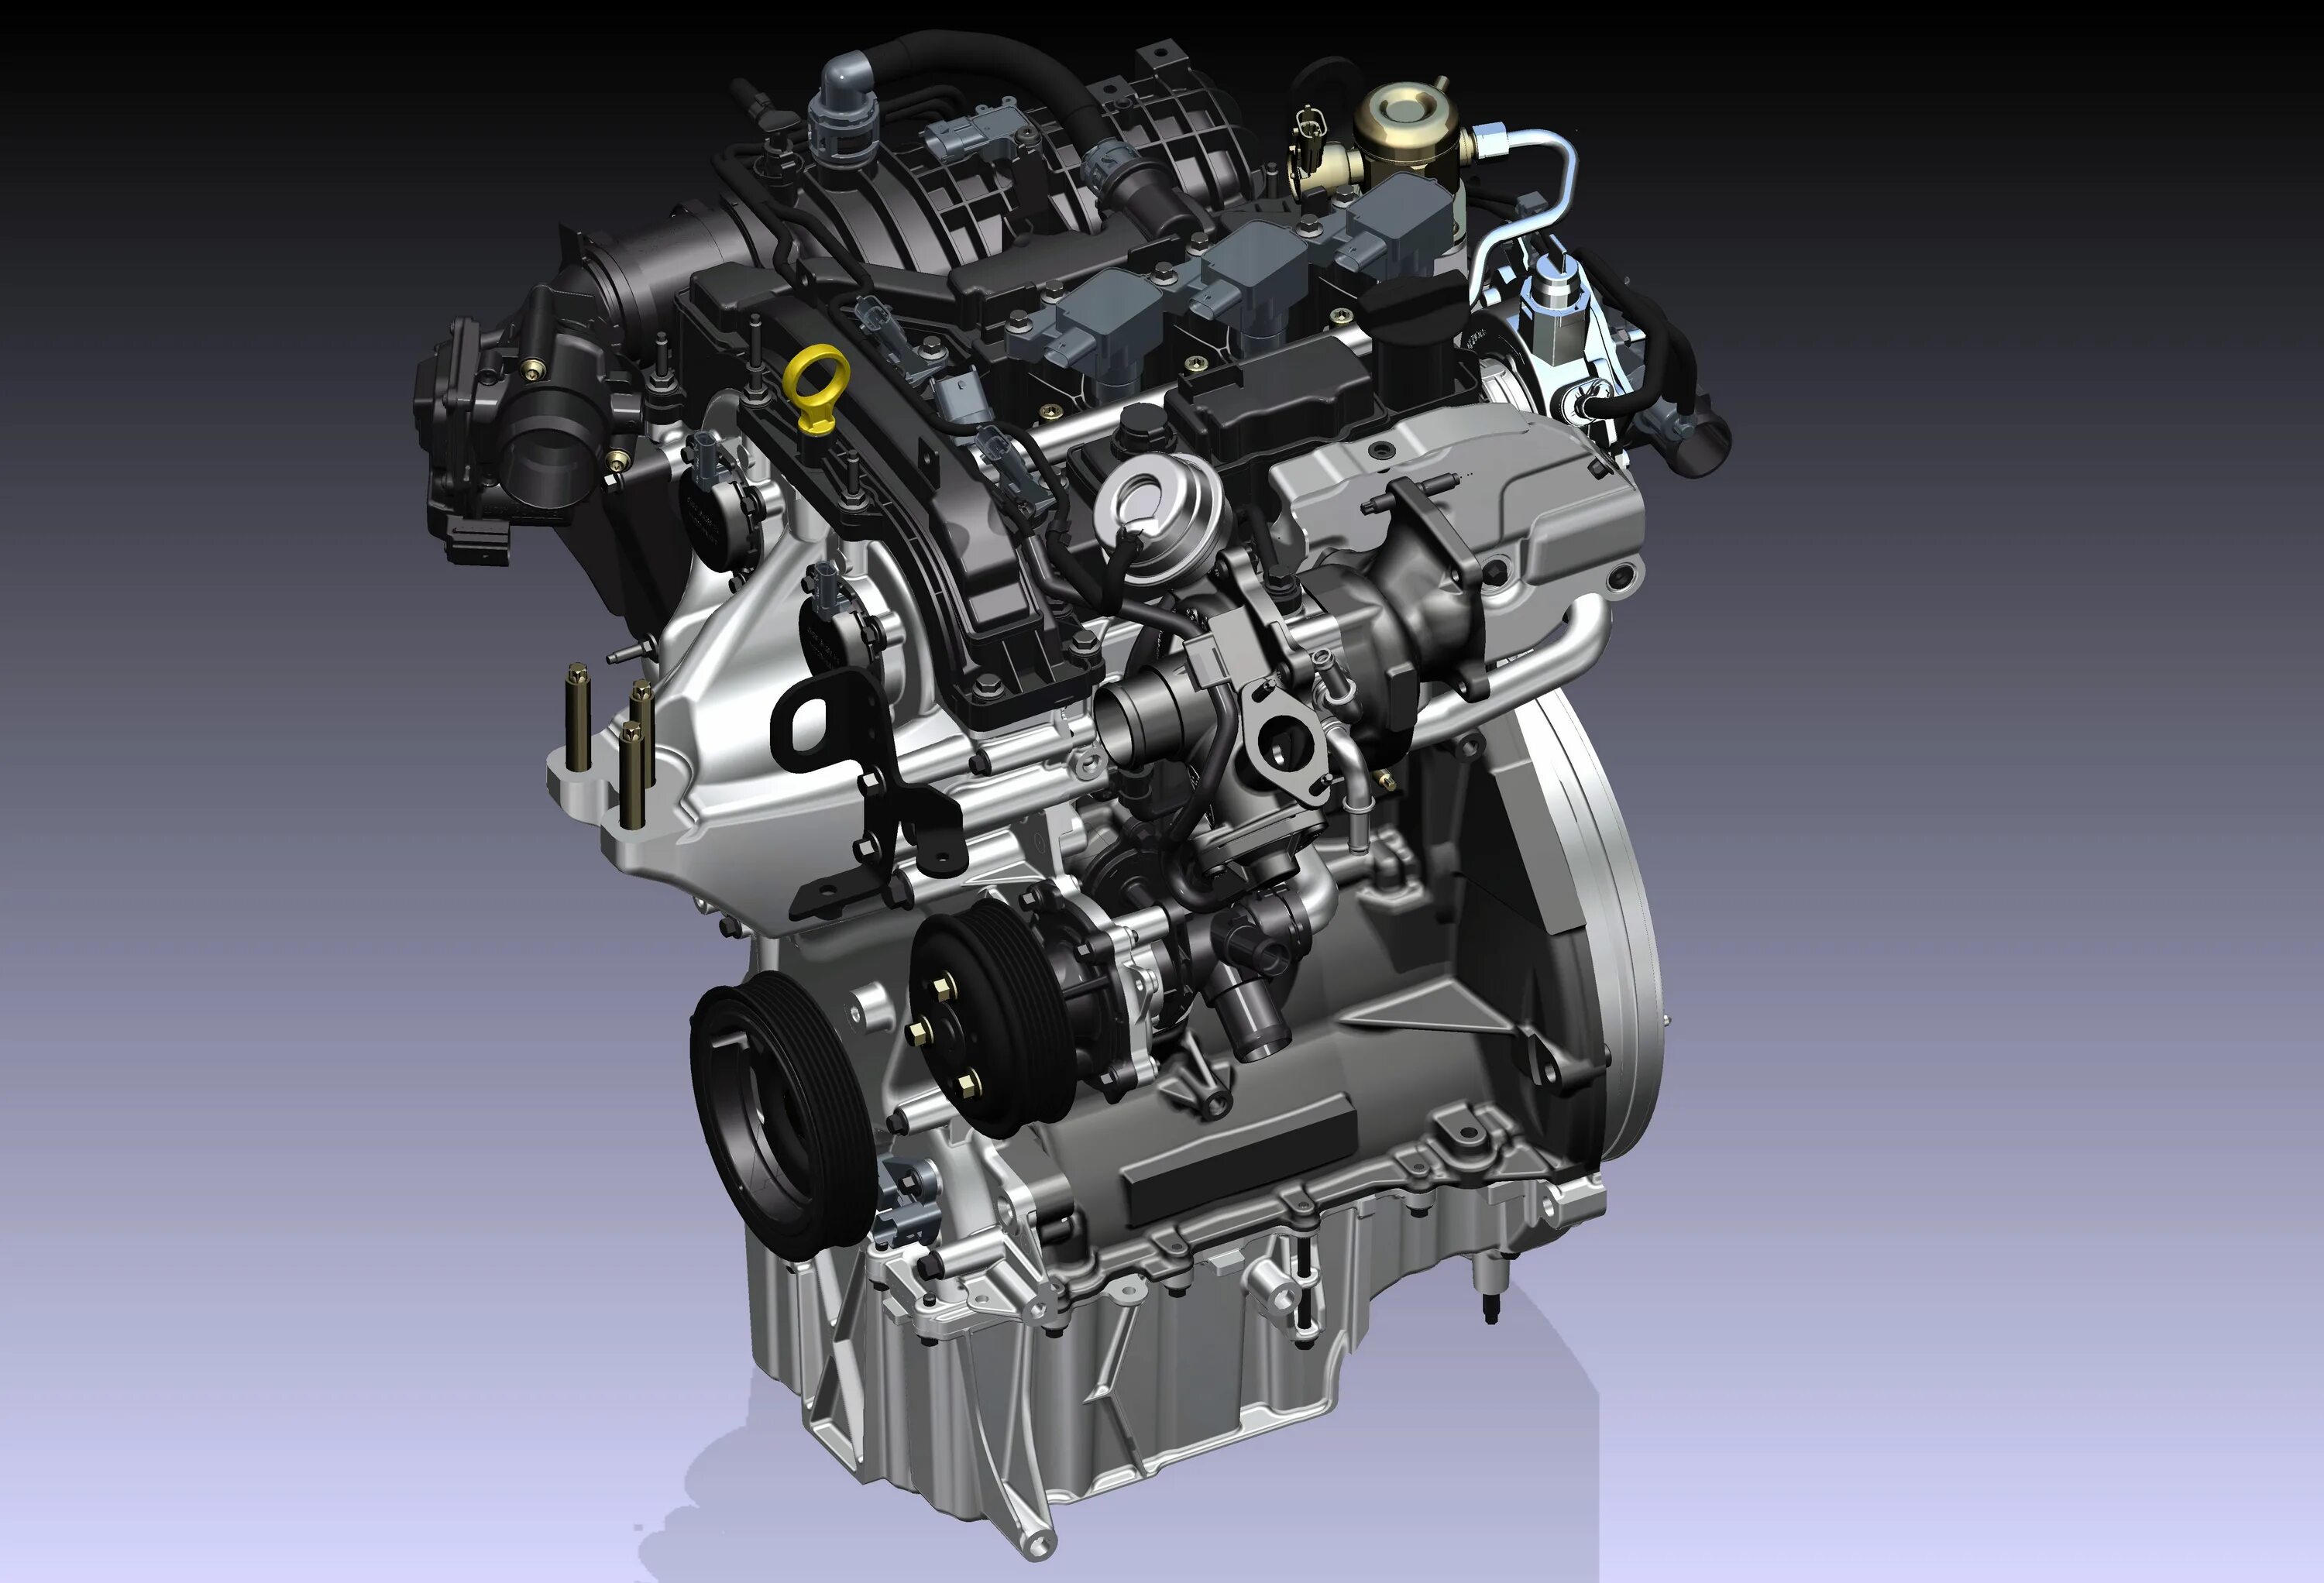 Мотор Форд Куга 1.6 экобуст. Двигатель 1.6 экобуст Форд. Форд фокус экобуст 1.6. Ford 3.5 ECOBOOST двигатель.